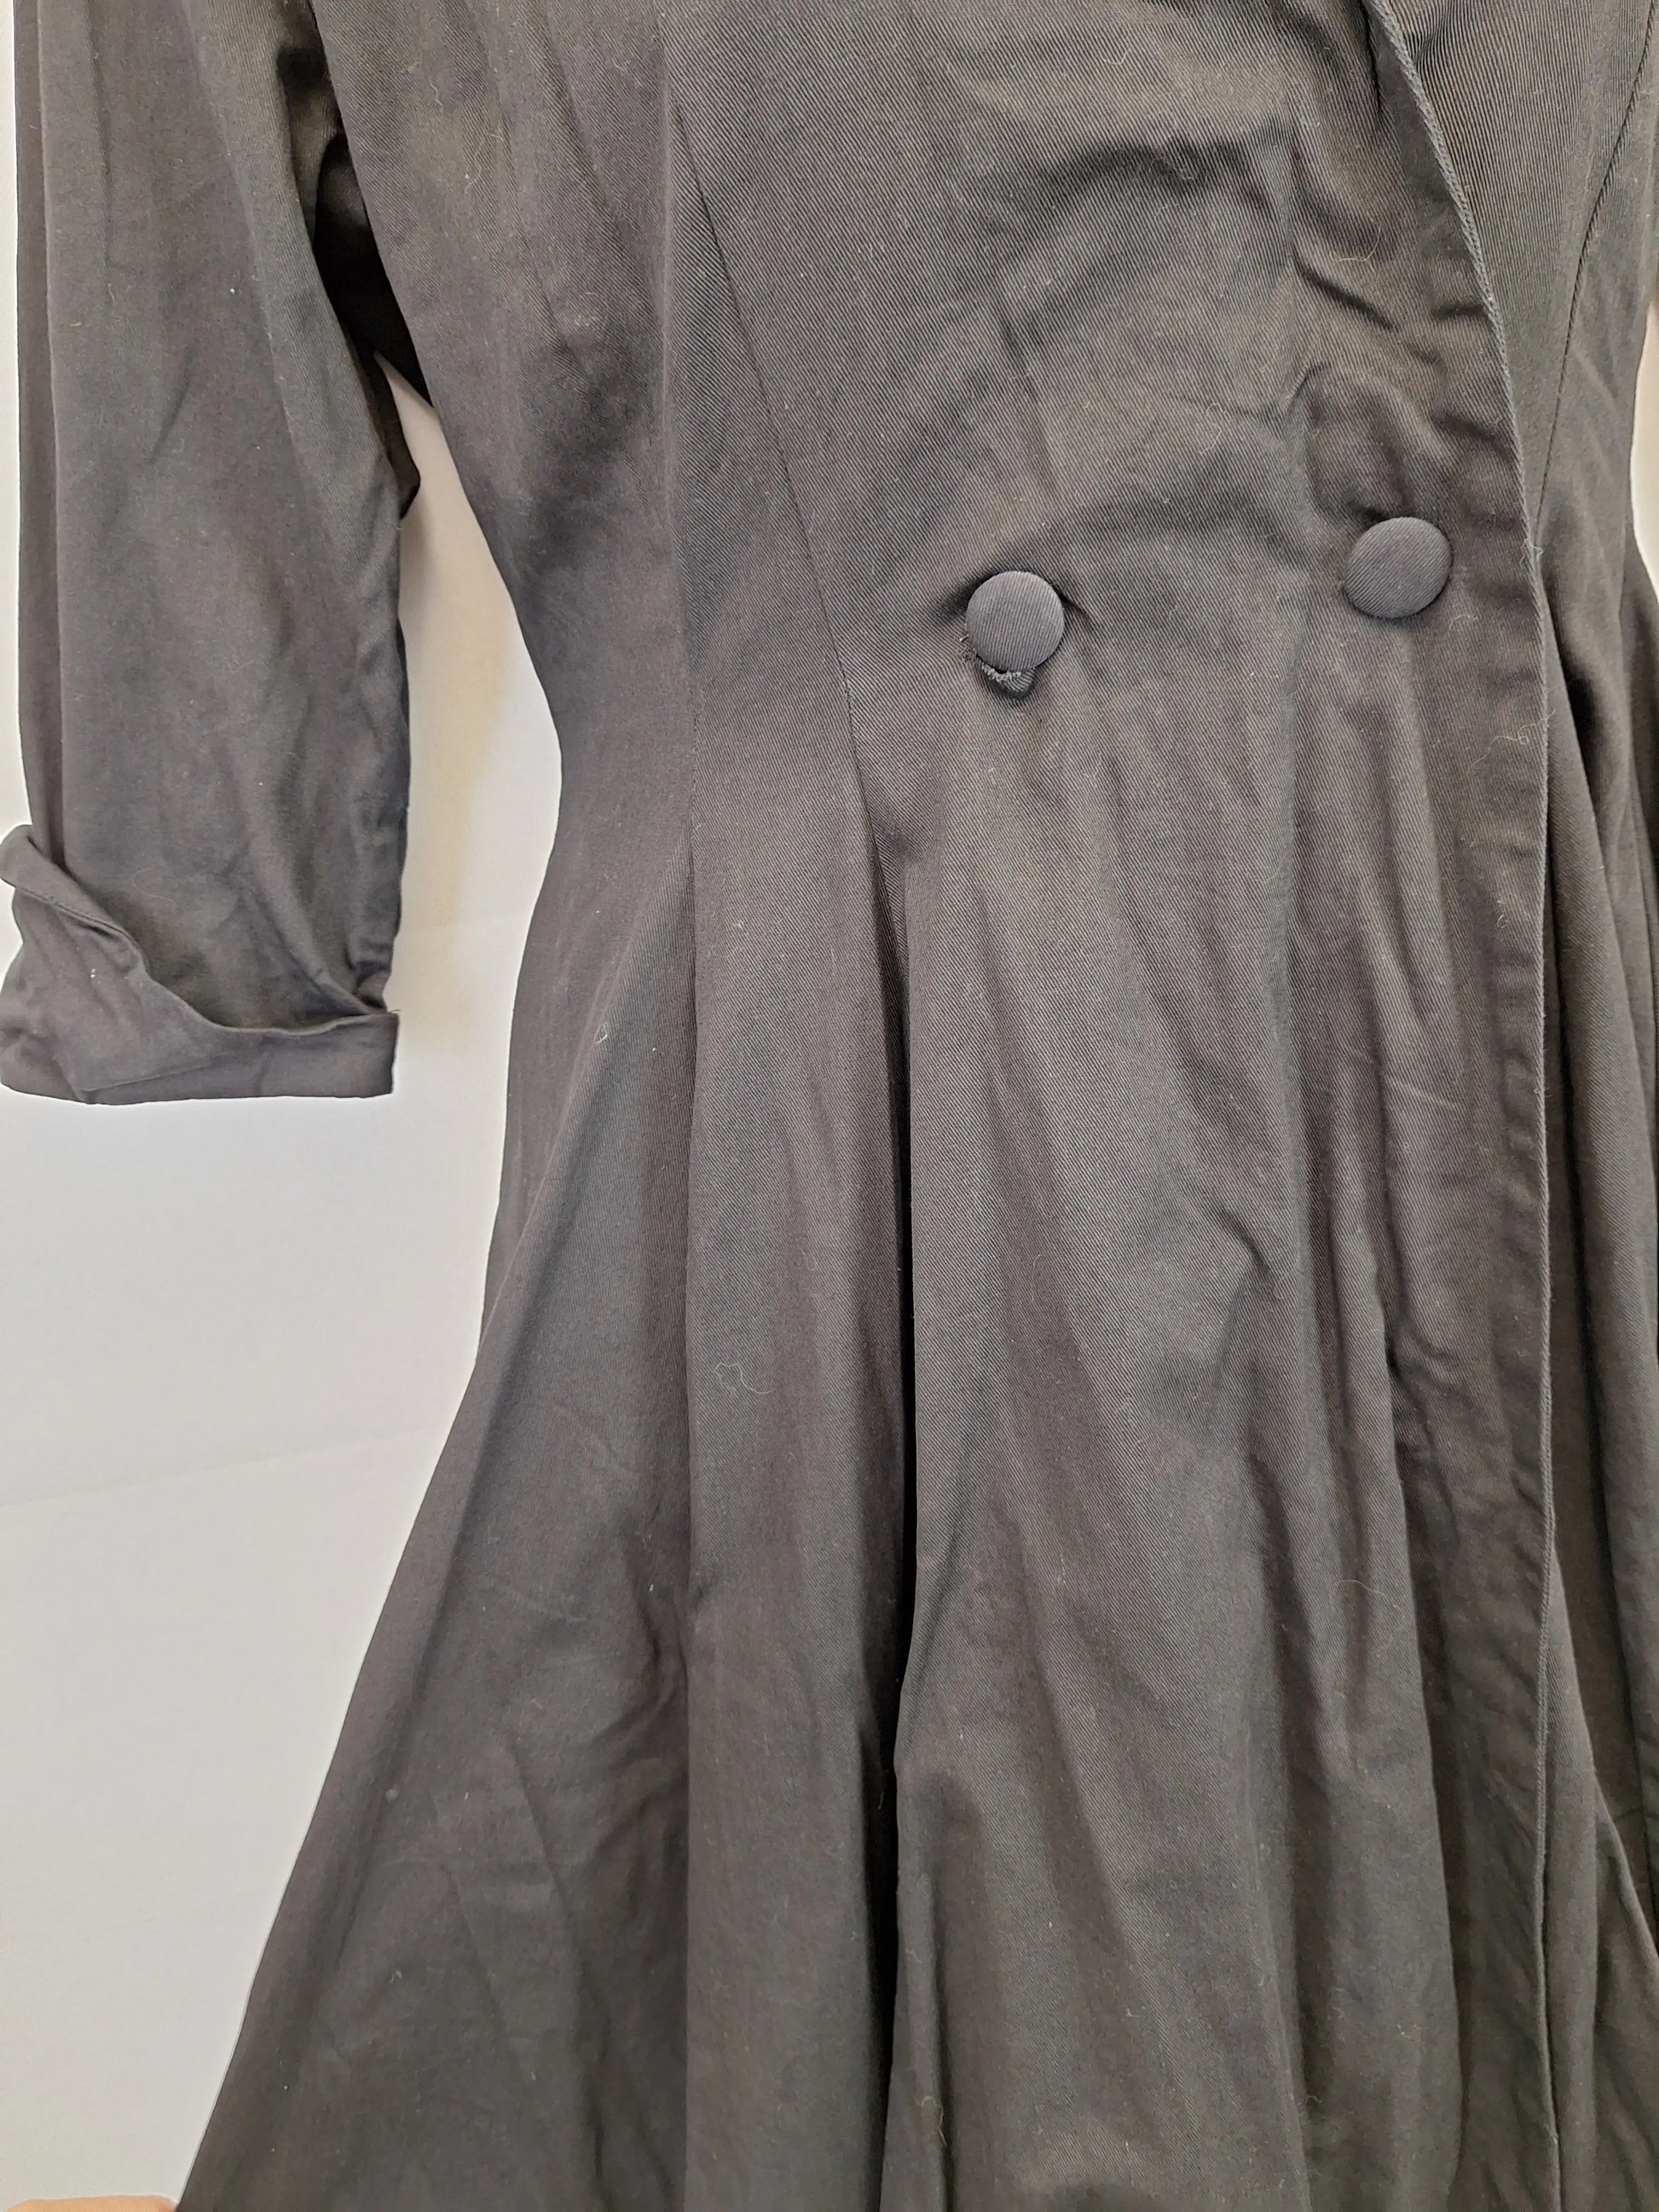 Unique Vintage Plunge Neck Vintage Midi Dress Size L by SwapUp-Online Second Hand Store-Online Thrift Store